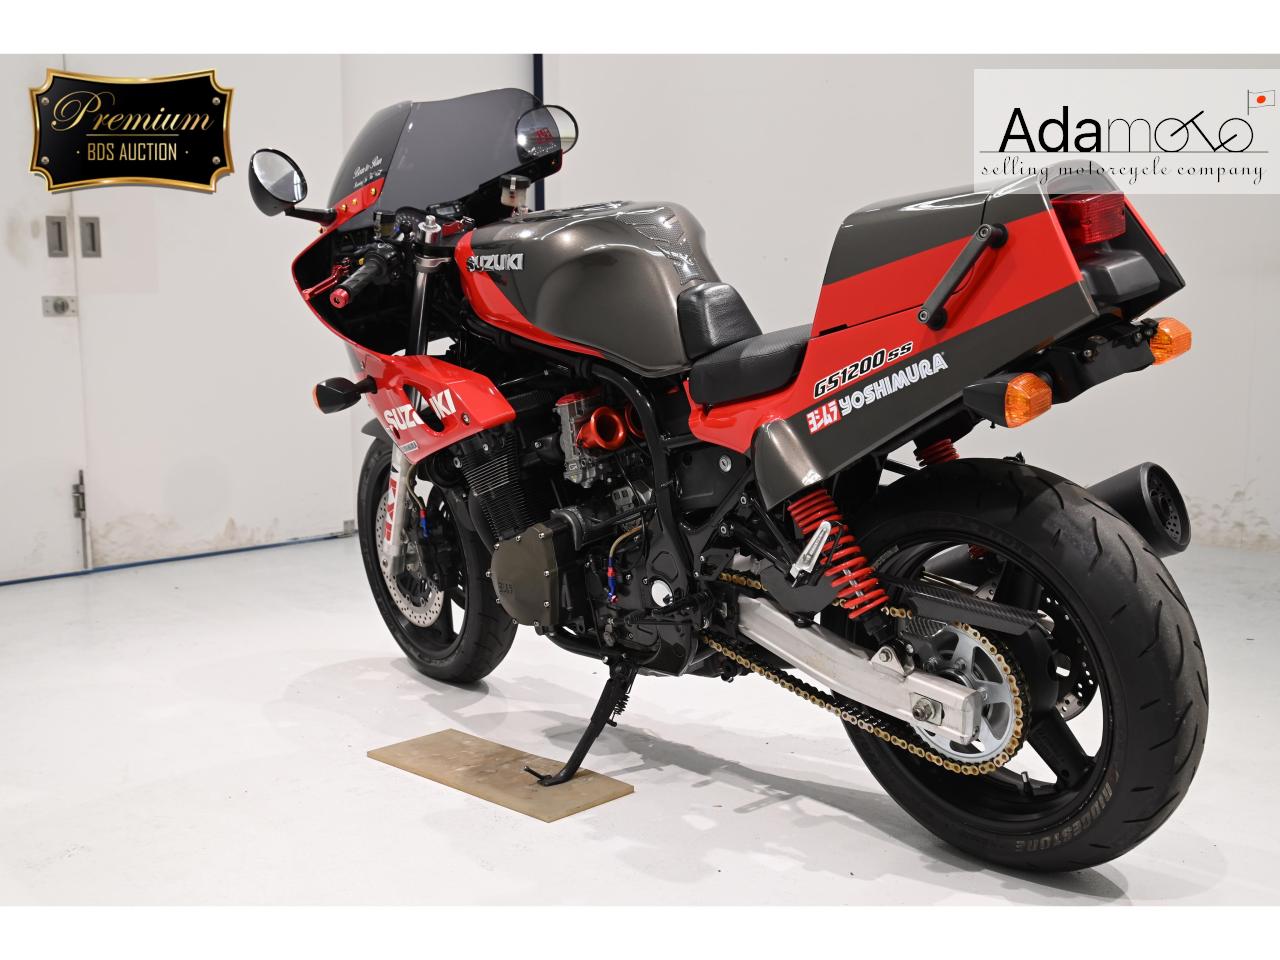 Suzuki GS1200SS - Adamoto - Motorcycles from Japan